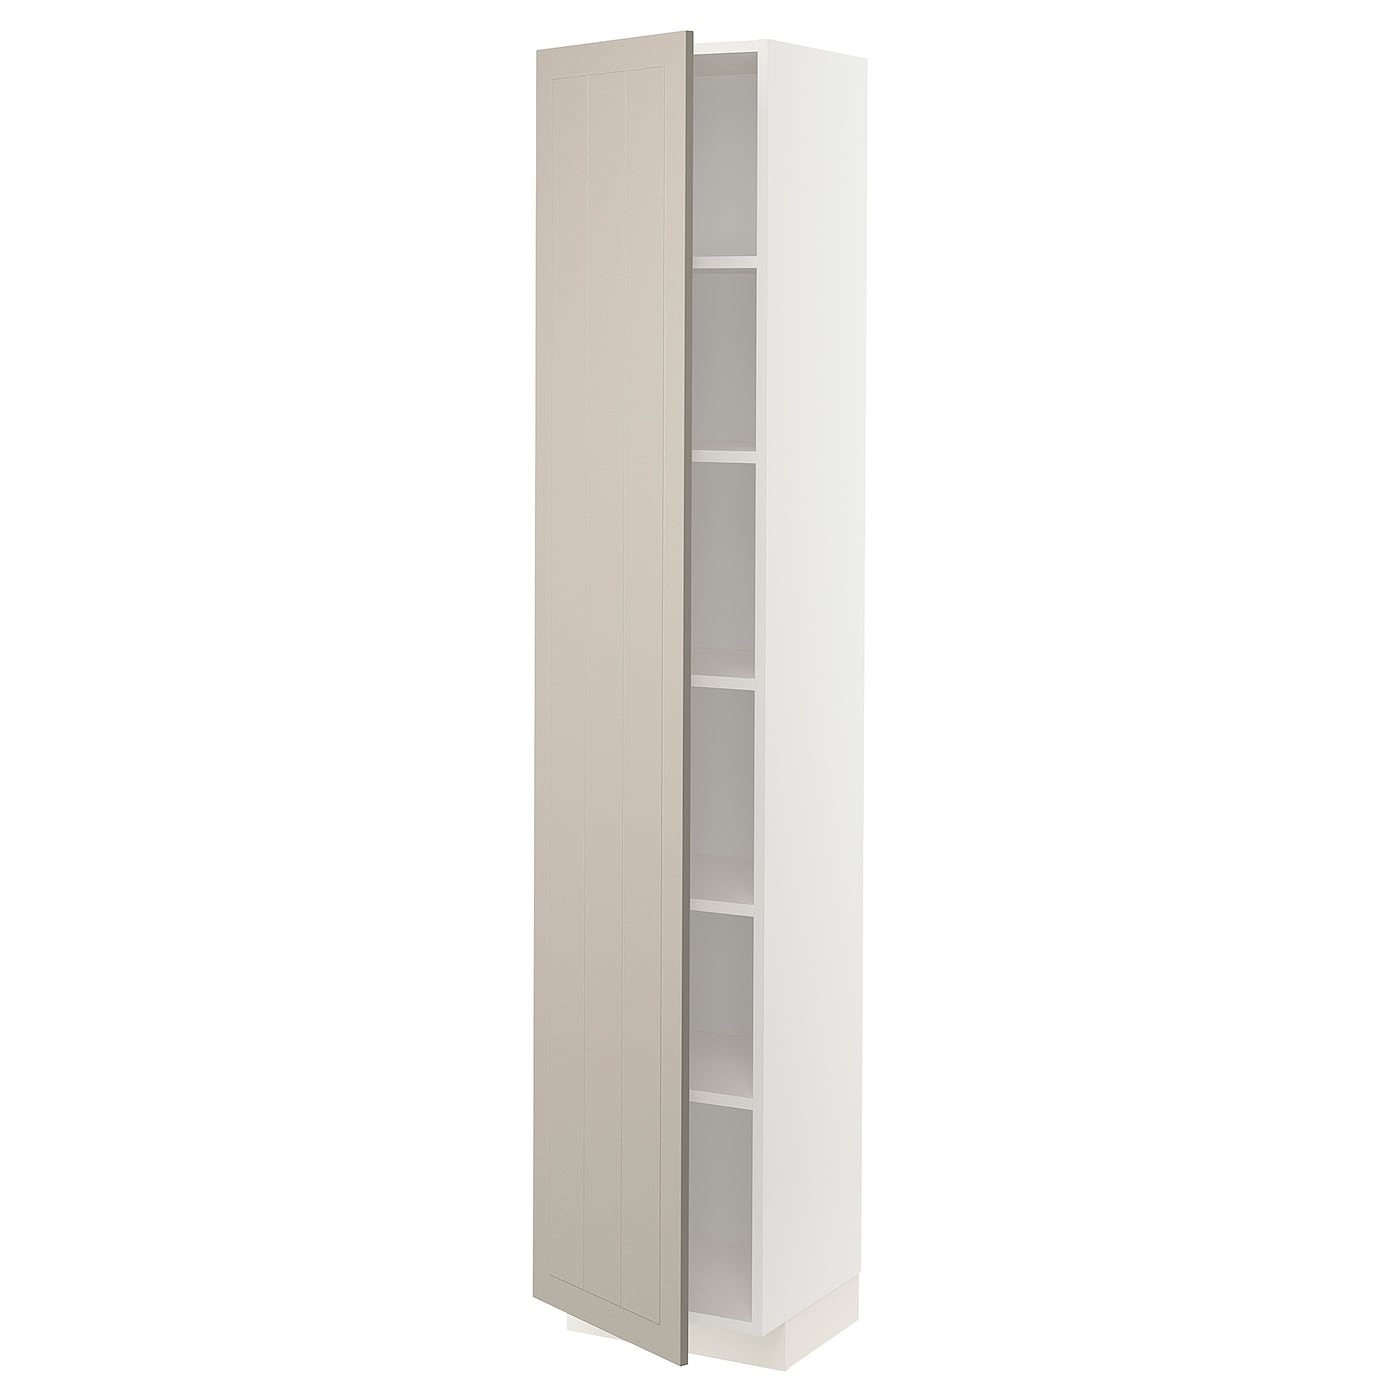 Высокий кухонный шкаф с полками - IKEA METOD/МЕТОД ИКЕА, 200х37х40 см, белый/бежевый